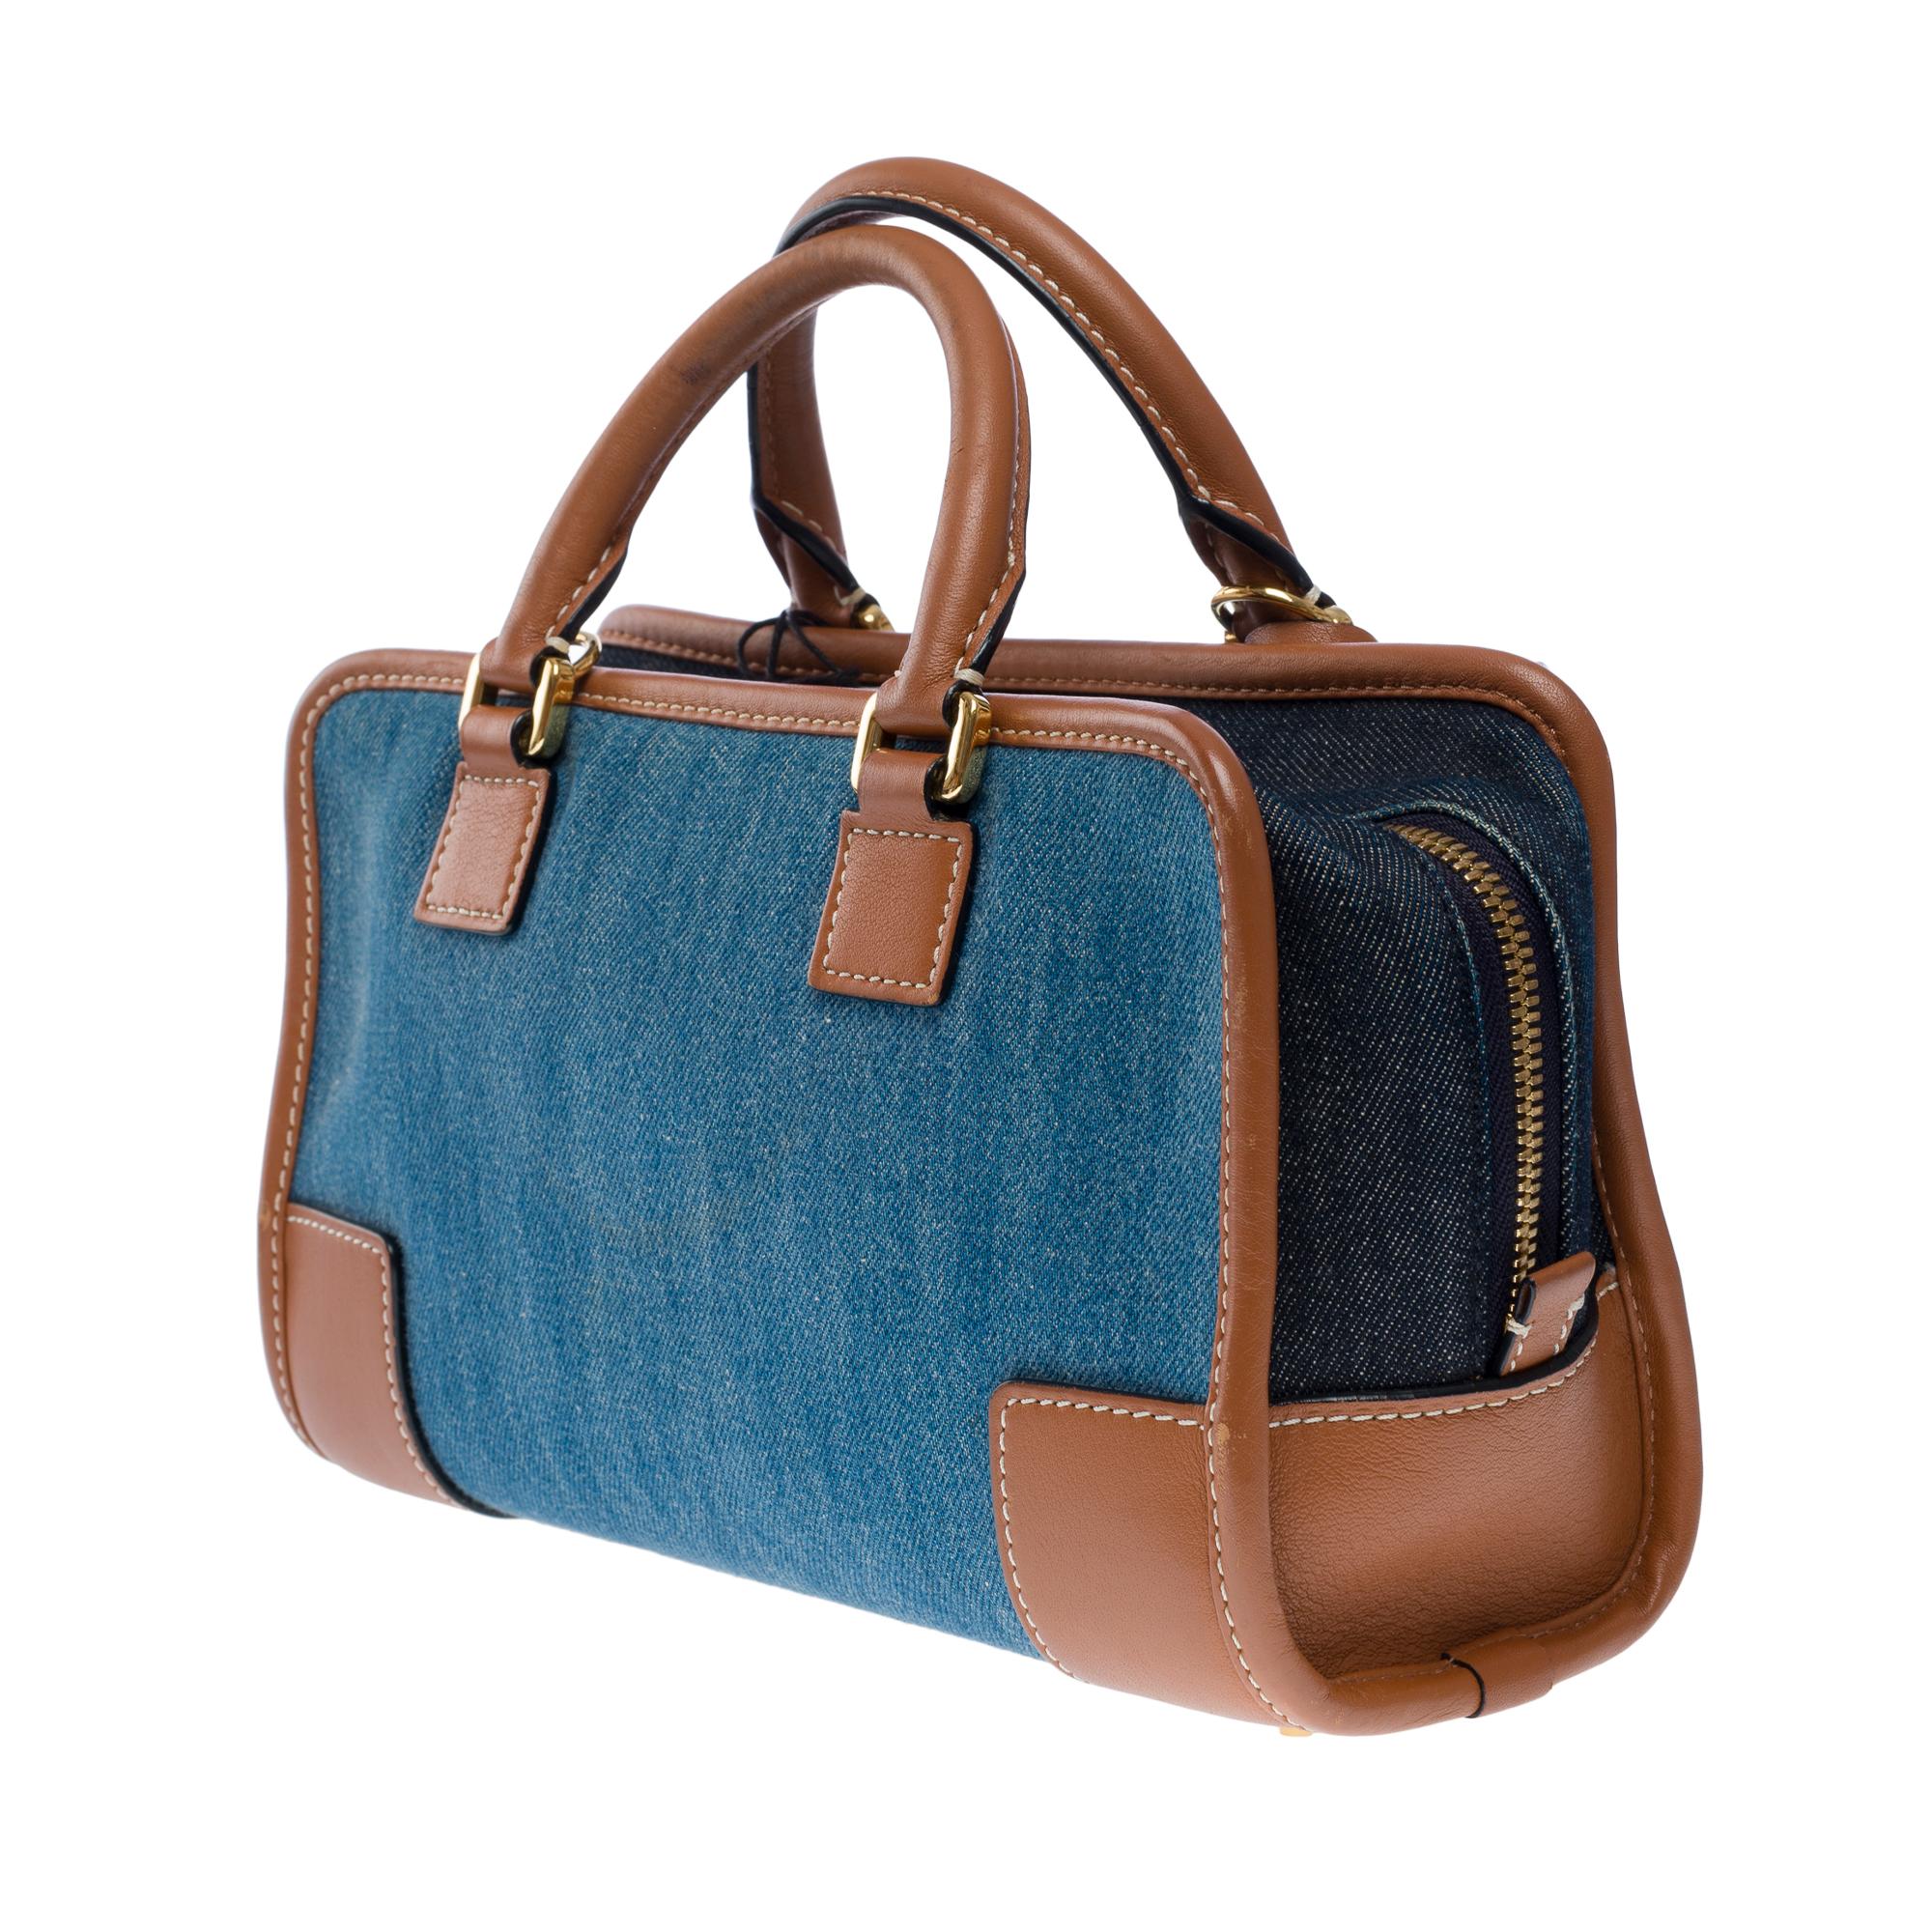 Loewe Amazona 23 2 Way handbag in denim and brown leather, GHW 2